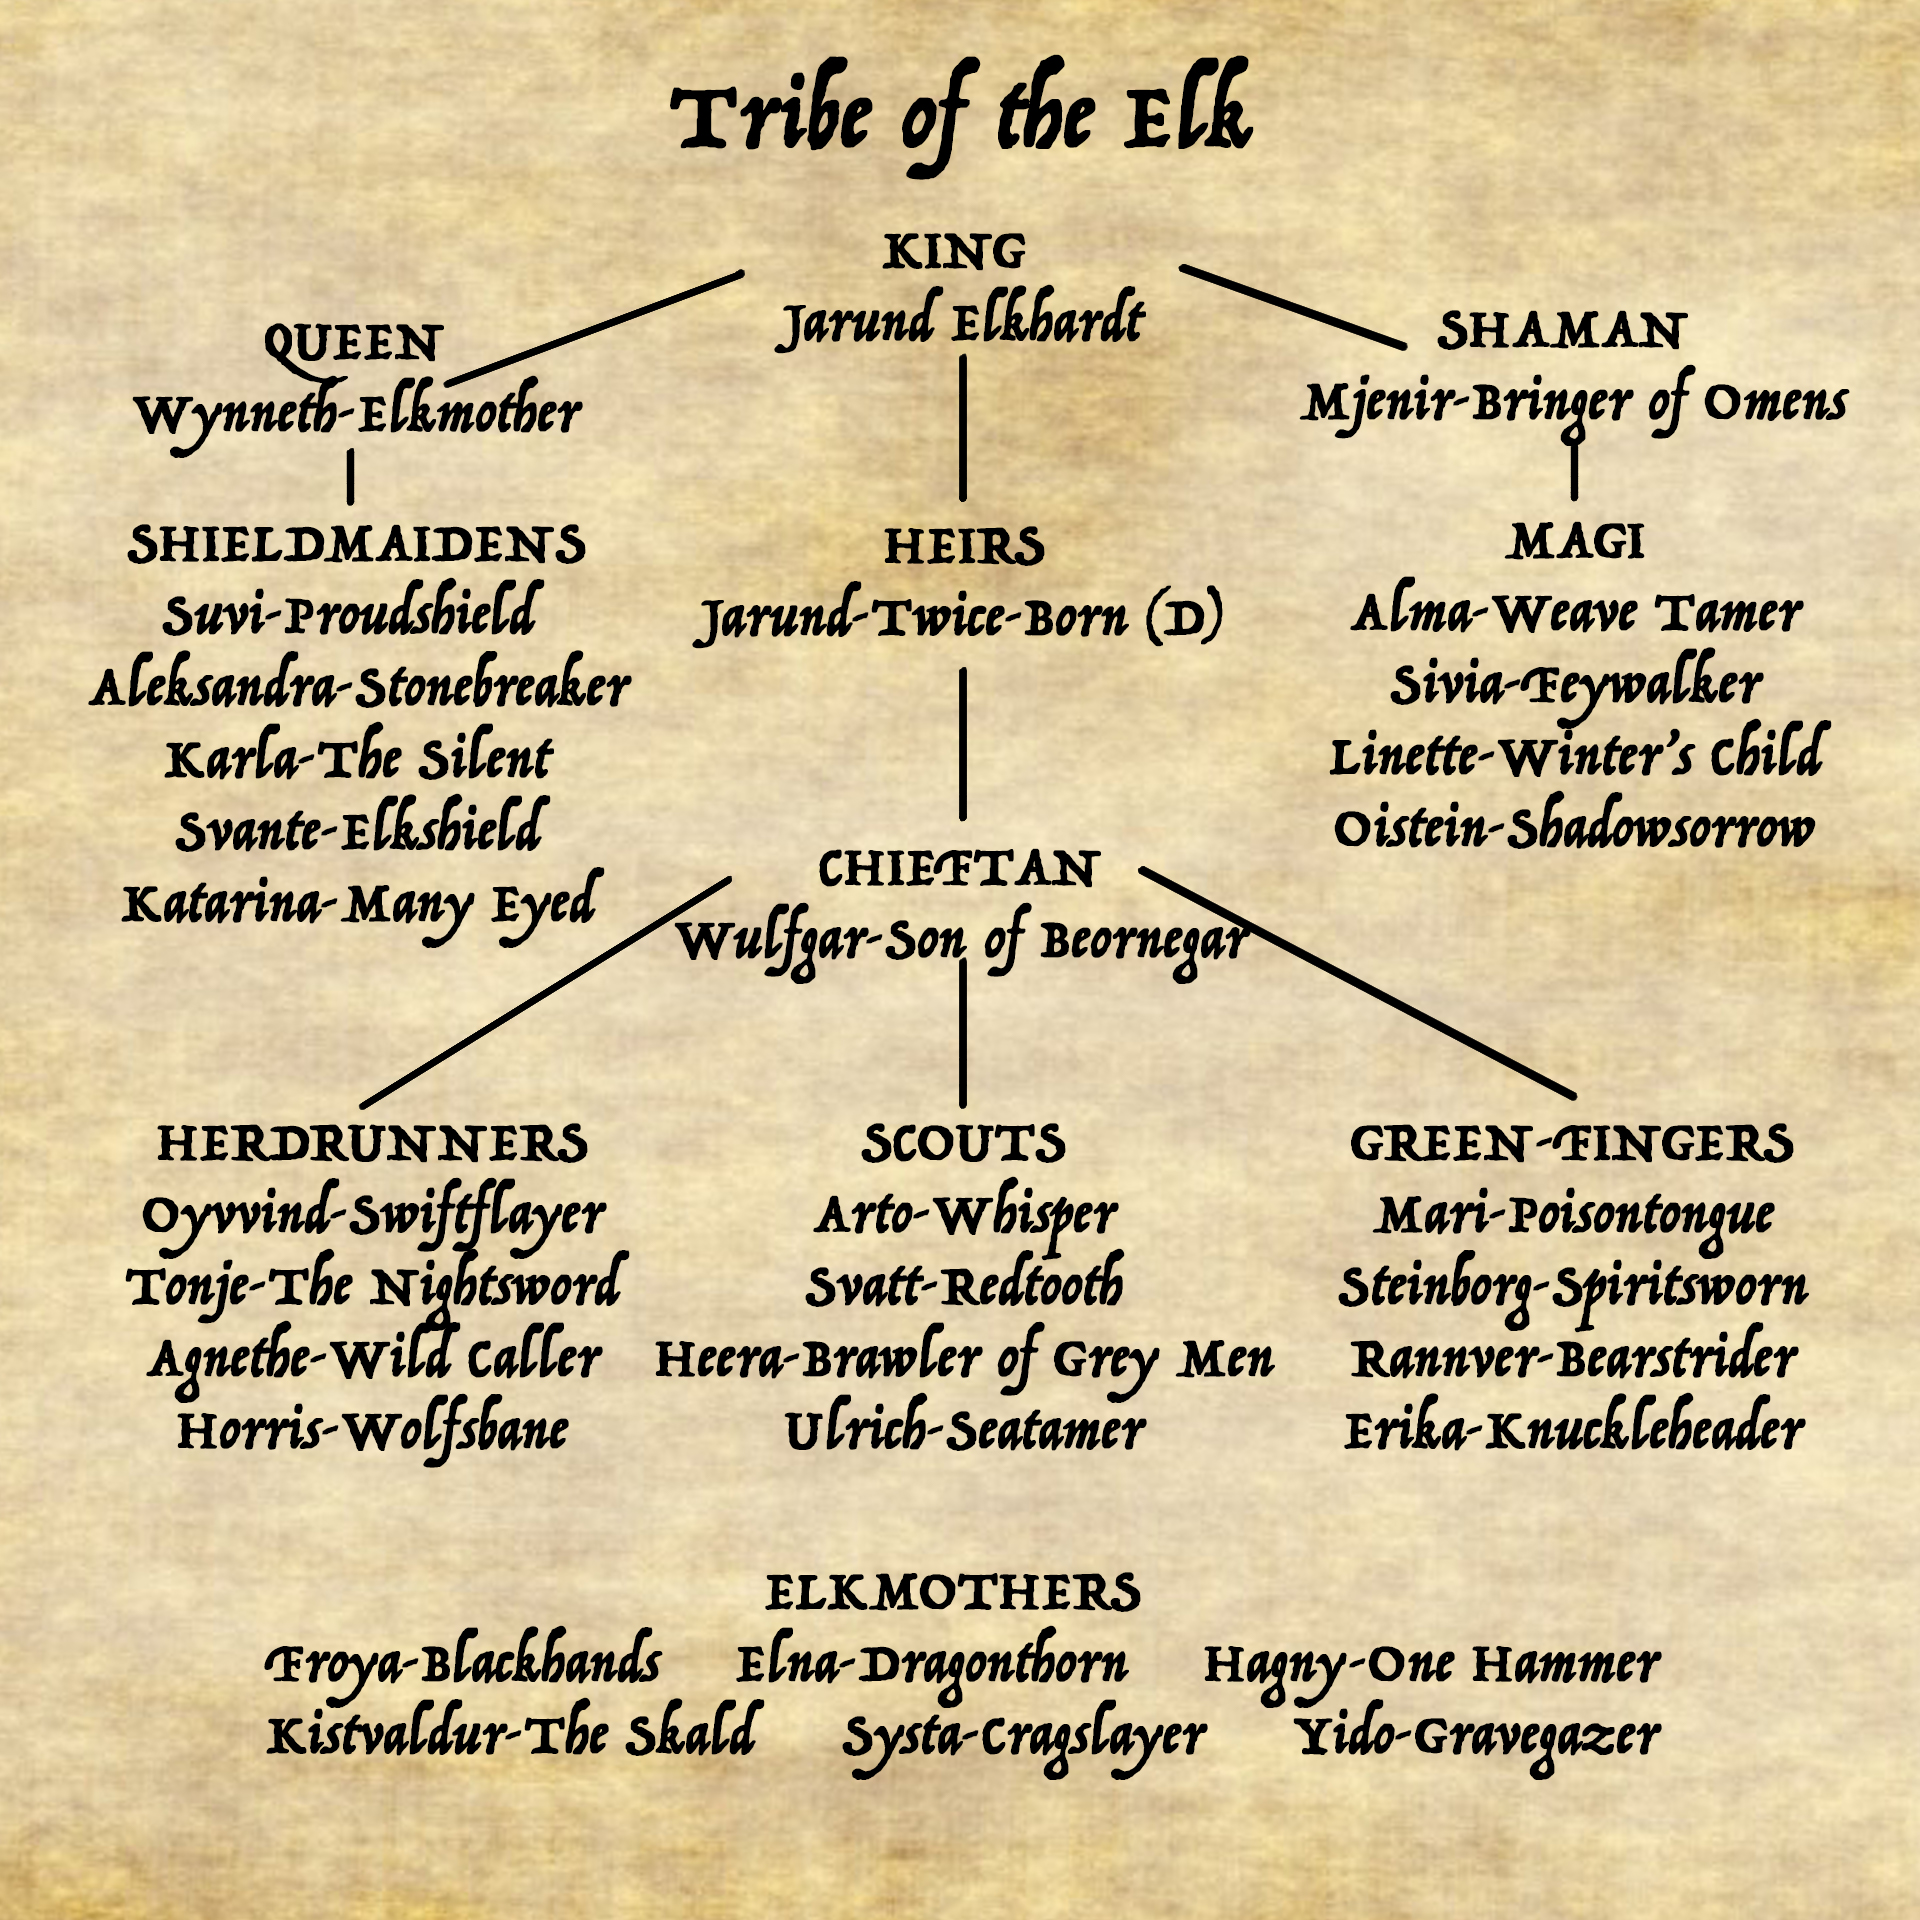 tribe-of-the-elk-titles.jpeg